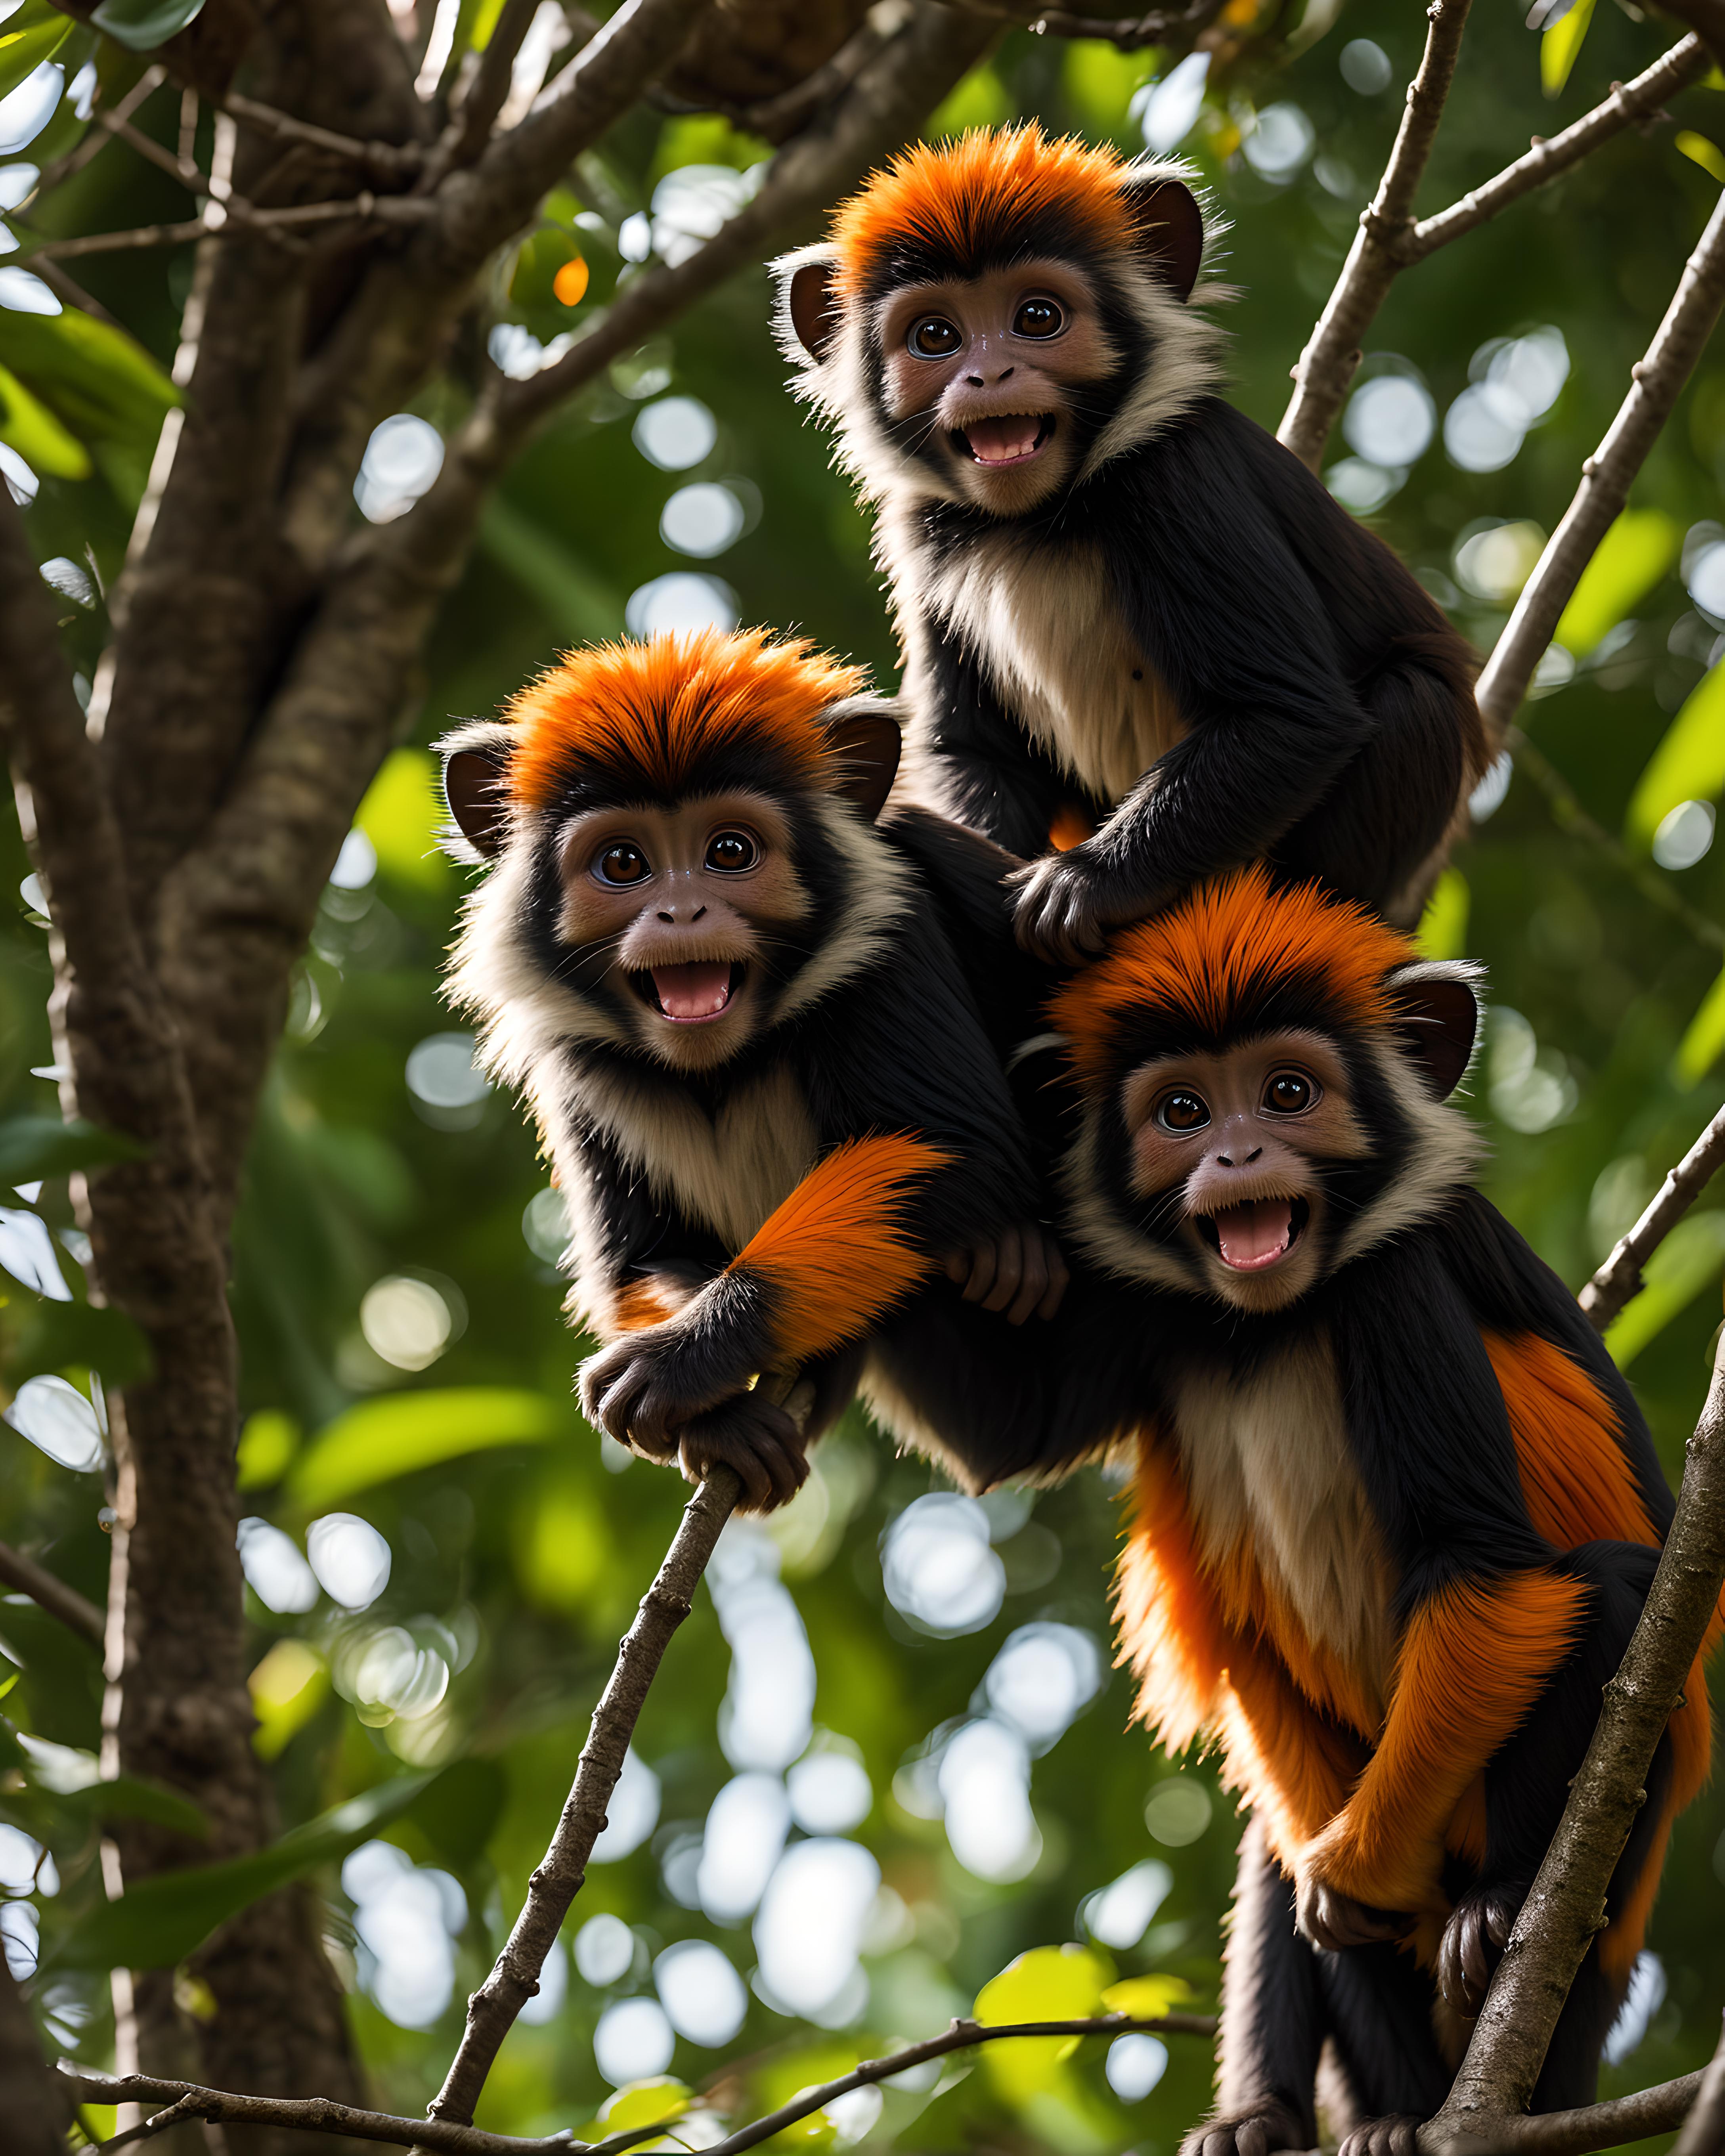 Three playful monkeys sitting on a branch together.